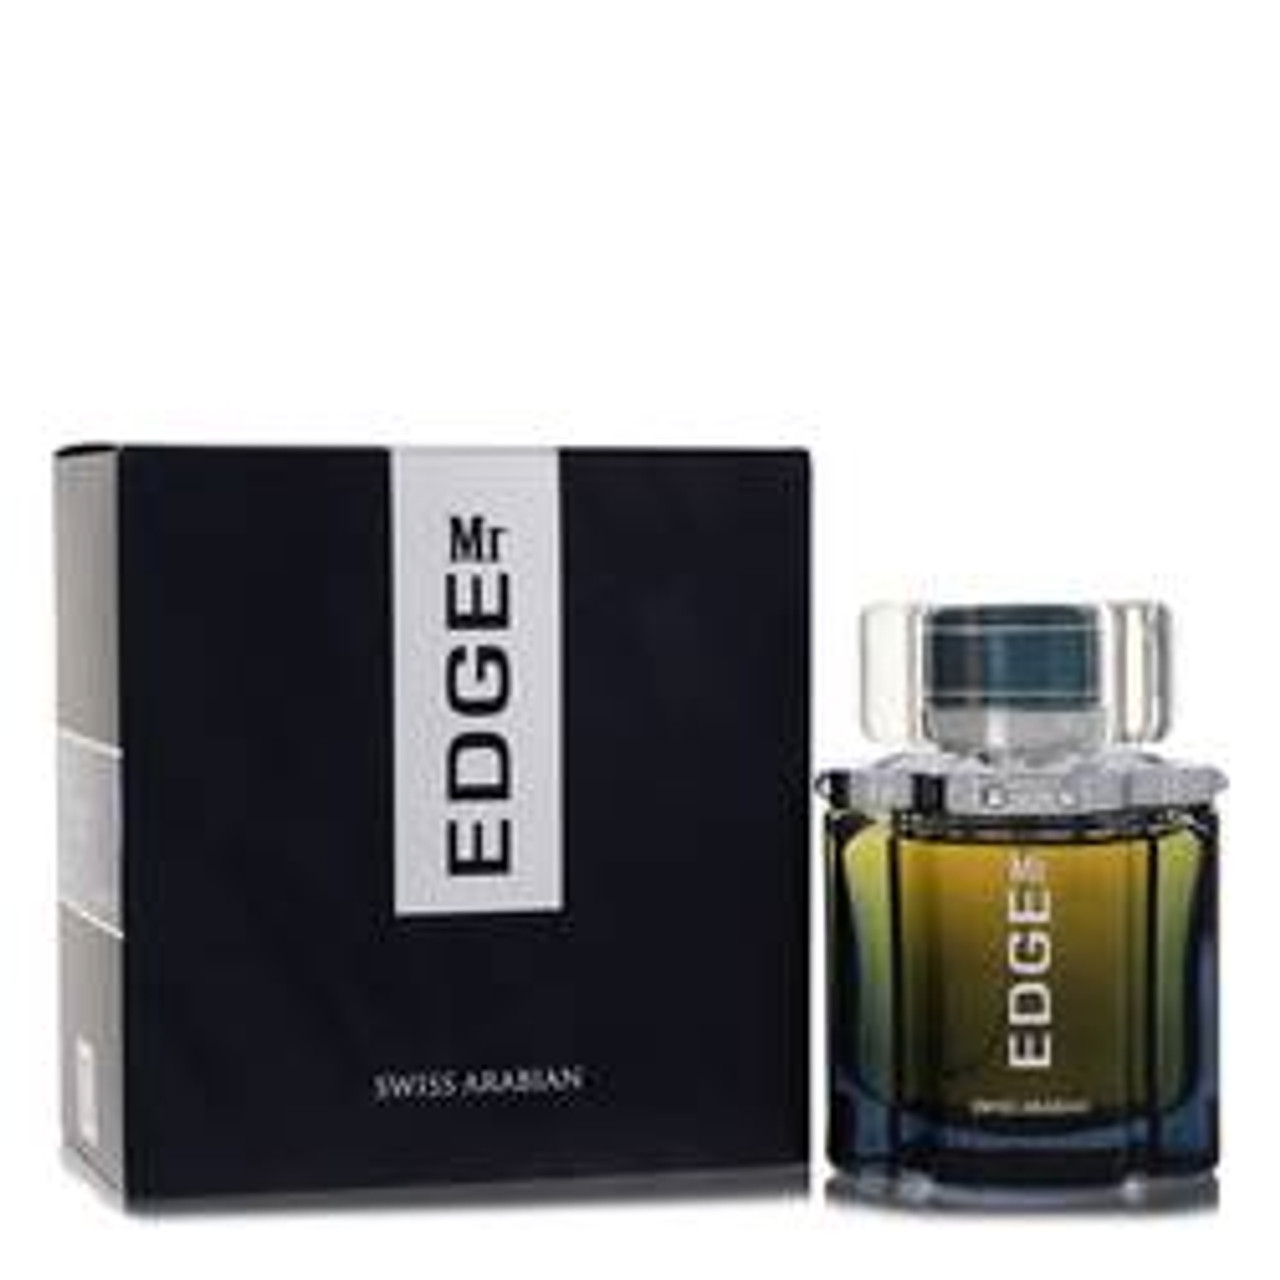 Mr Edge Cologne By Swiss Arabian Eau De Parfum Spray 3.4 oz for Men - [From 156.00 - Choose pk Qty ] - *Ships from Miami